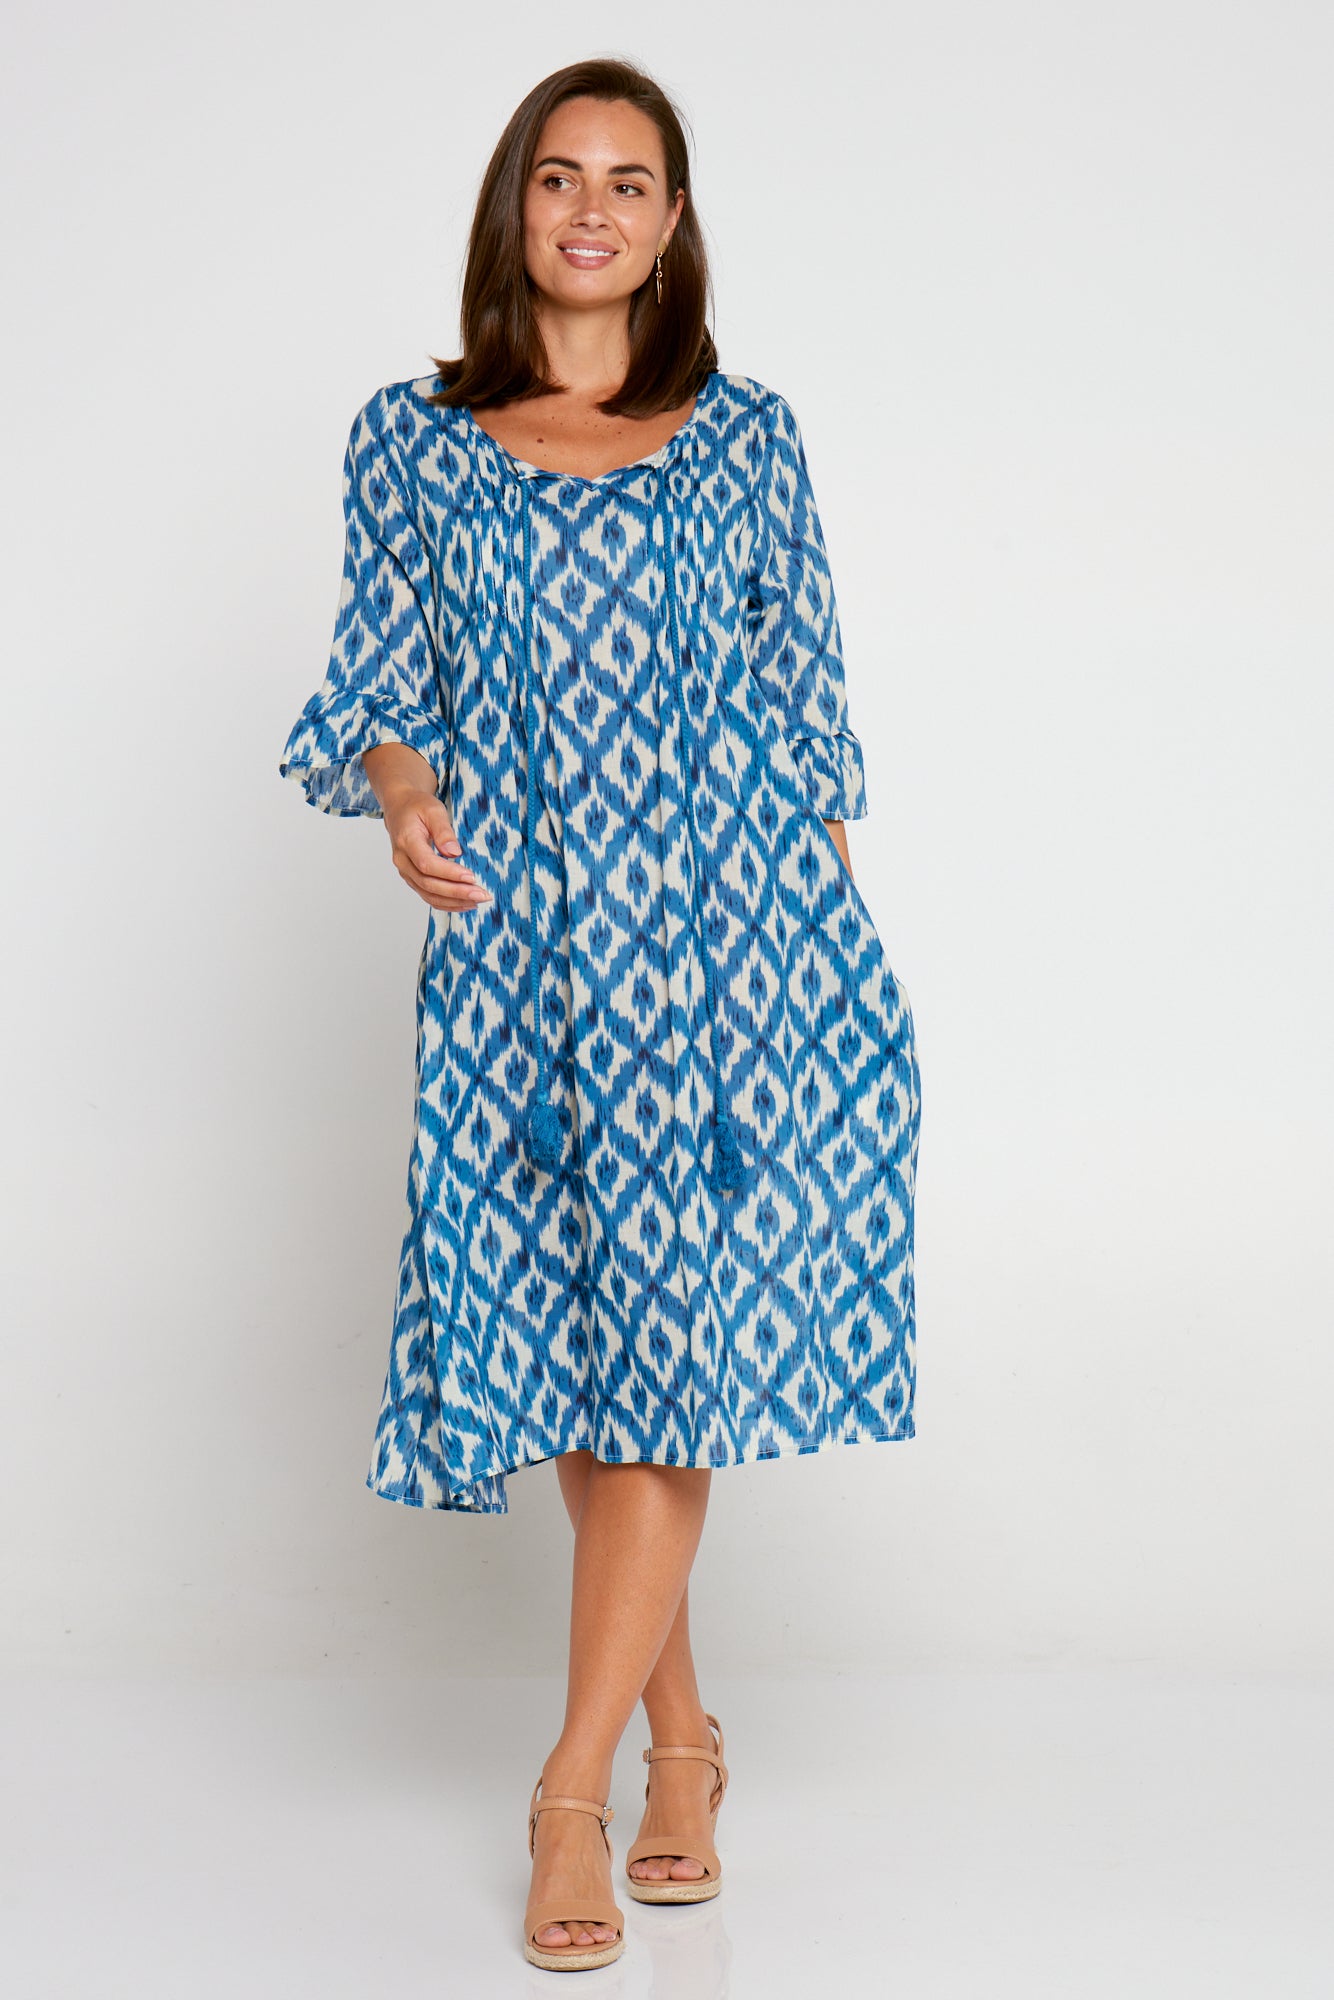 Bethany Cotton Dress - Blue Ikat Print